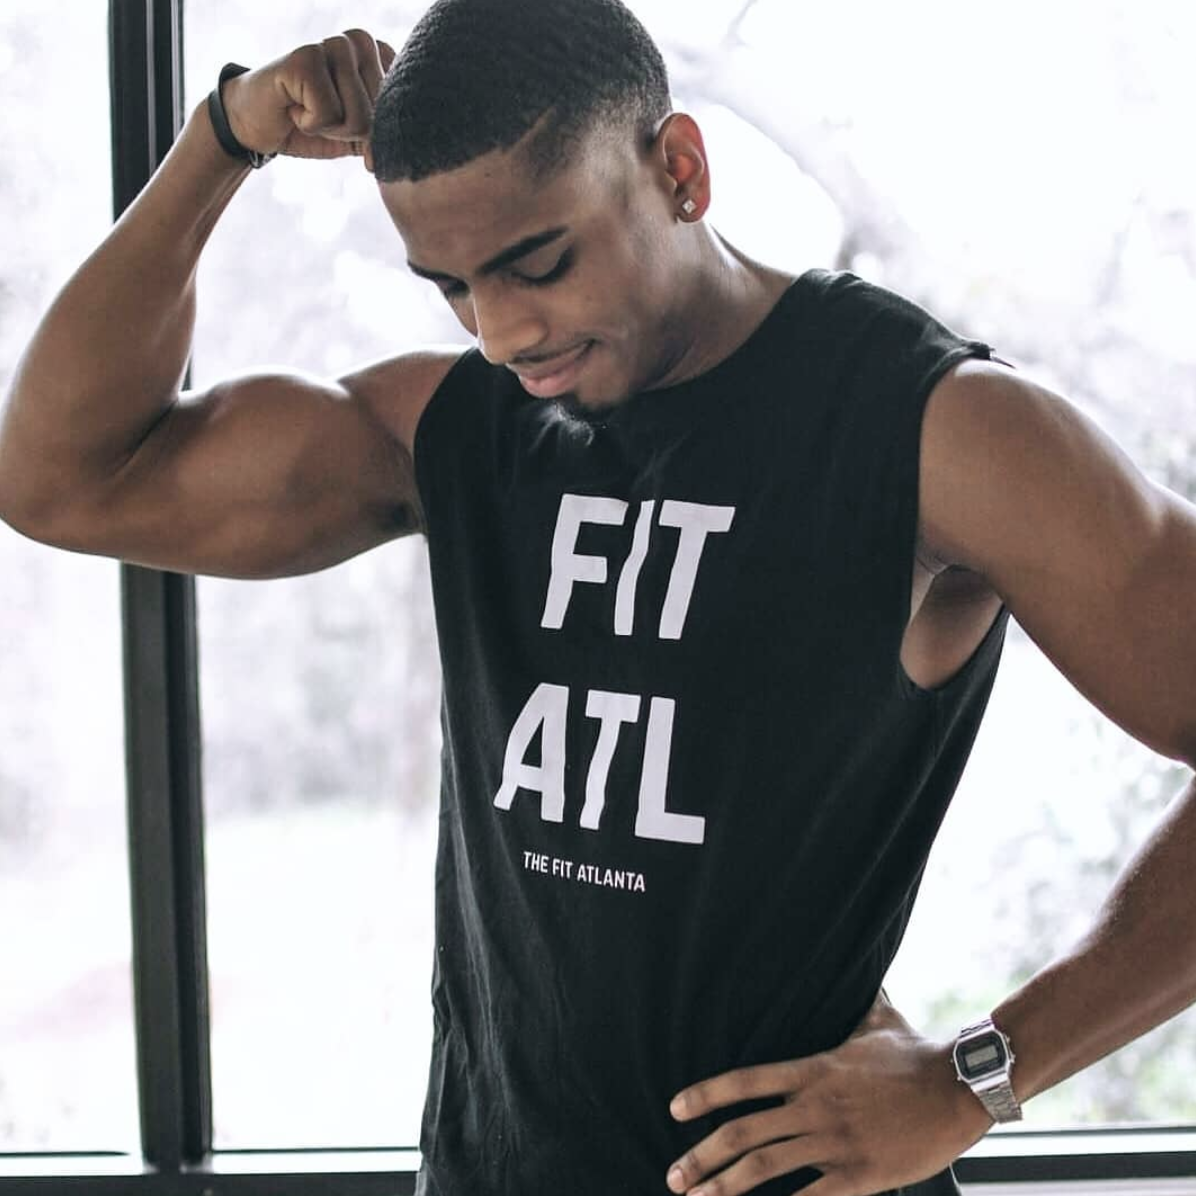 The+Fit+Atlanta+Muscle+Tank